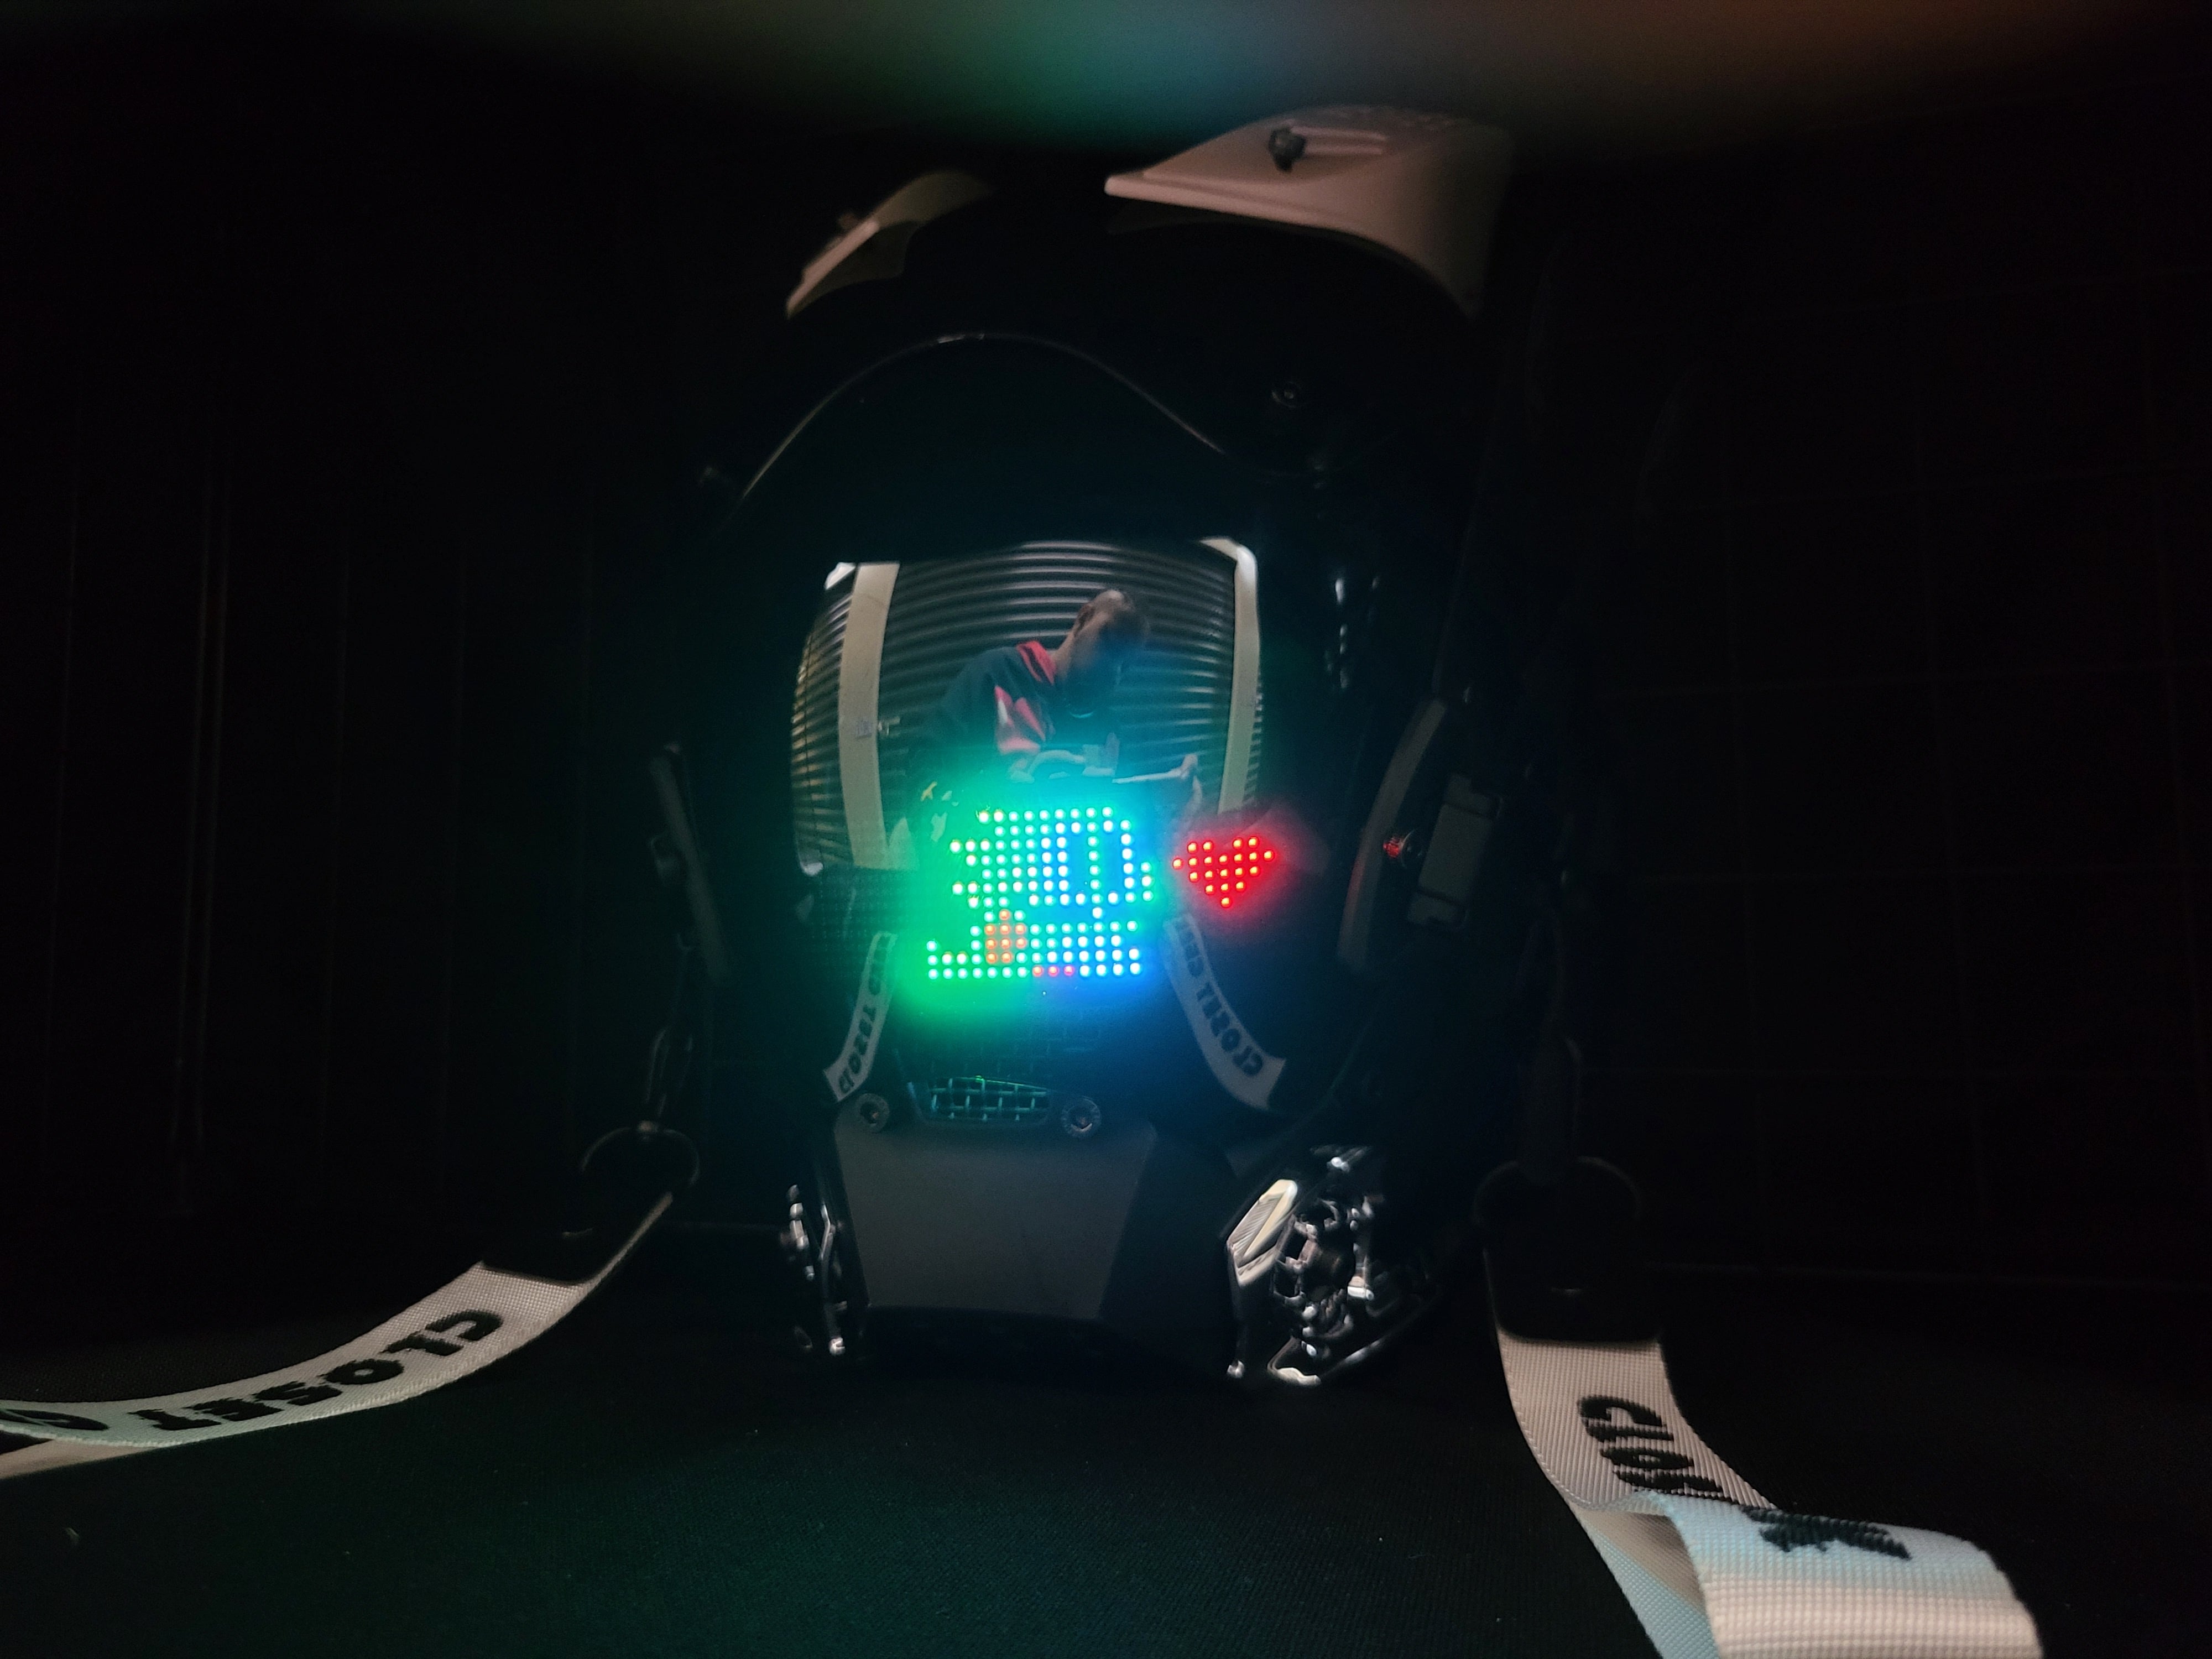 L.e.d programmable cyber helmet with fins